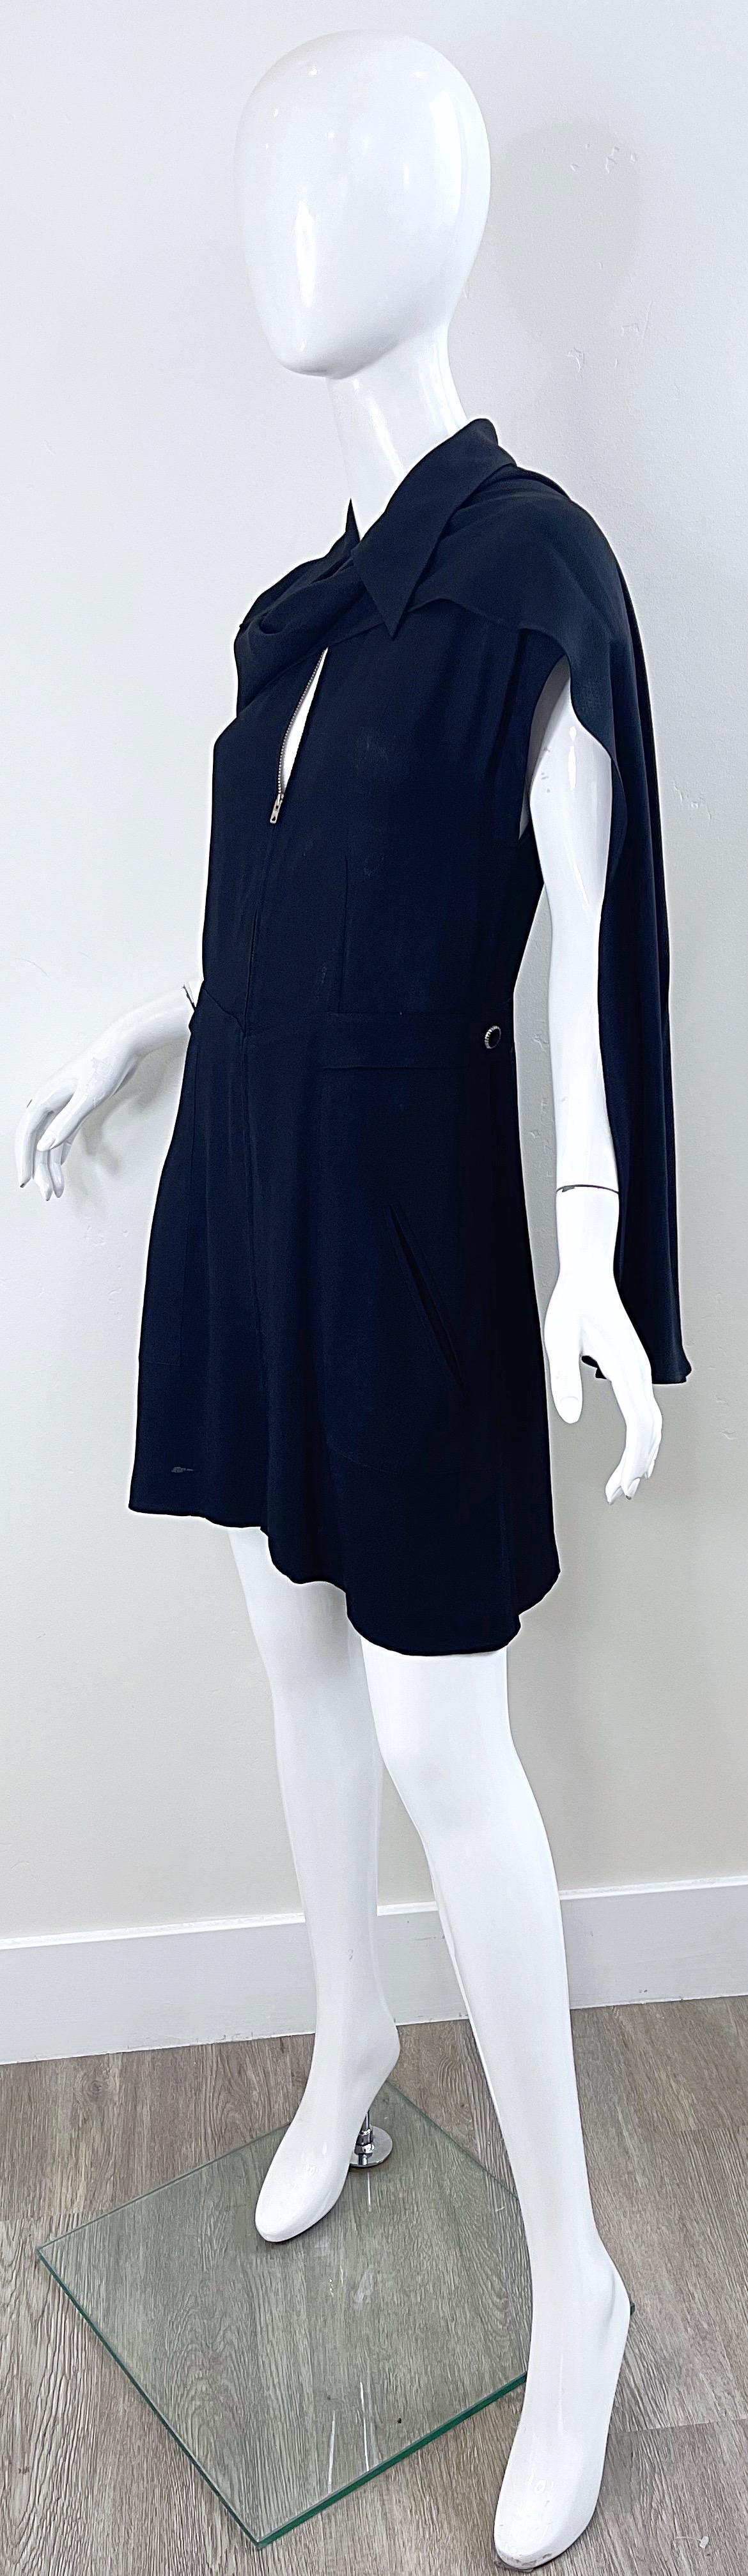 Karl Lagerfeld 1990s Black Avant Garde Vintage 90s Sash Zipper Mini Dress For Sale 1